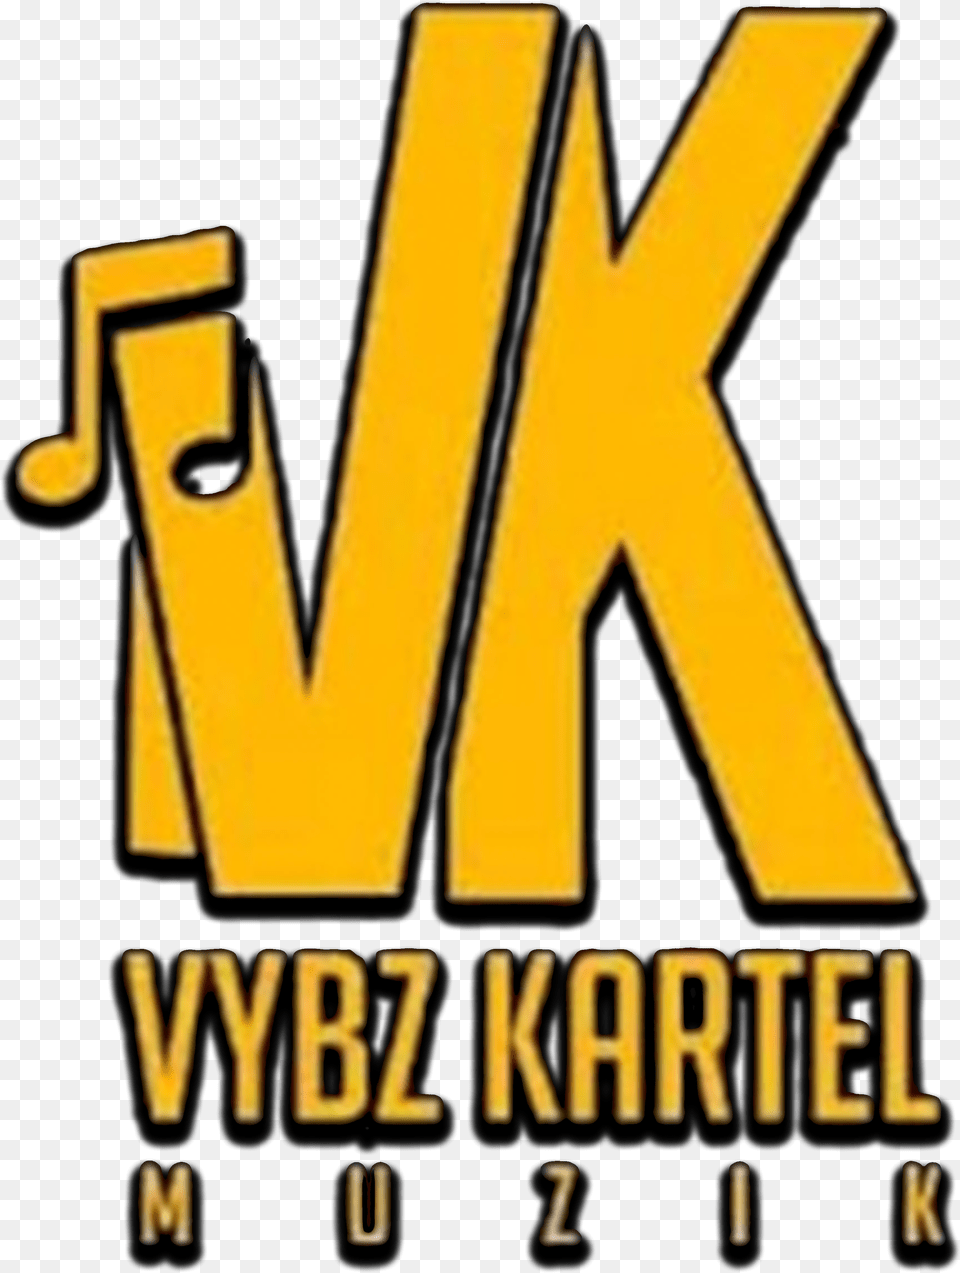 Vevo Videos Vybzkartelvevo U2013 Vybz Kartel Muzik Sign, Transportation, Van, Vehicle, Car Free Png Download